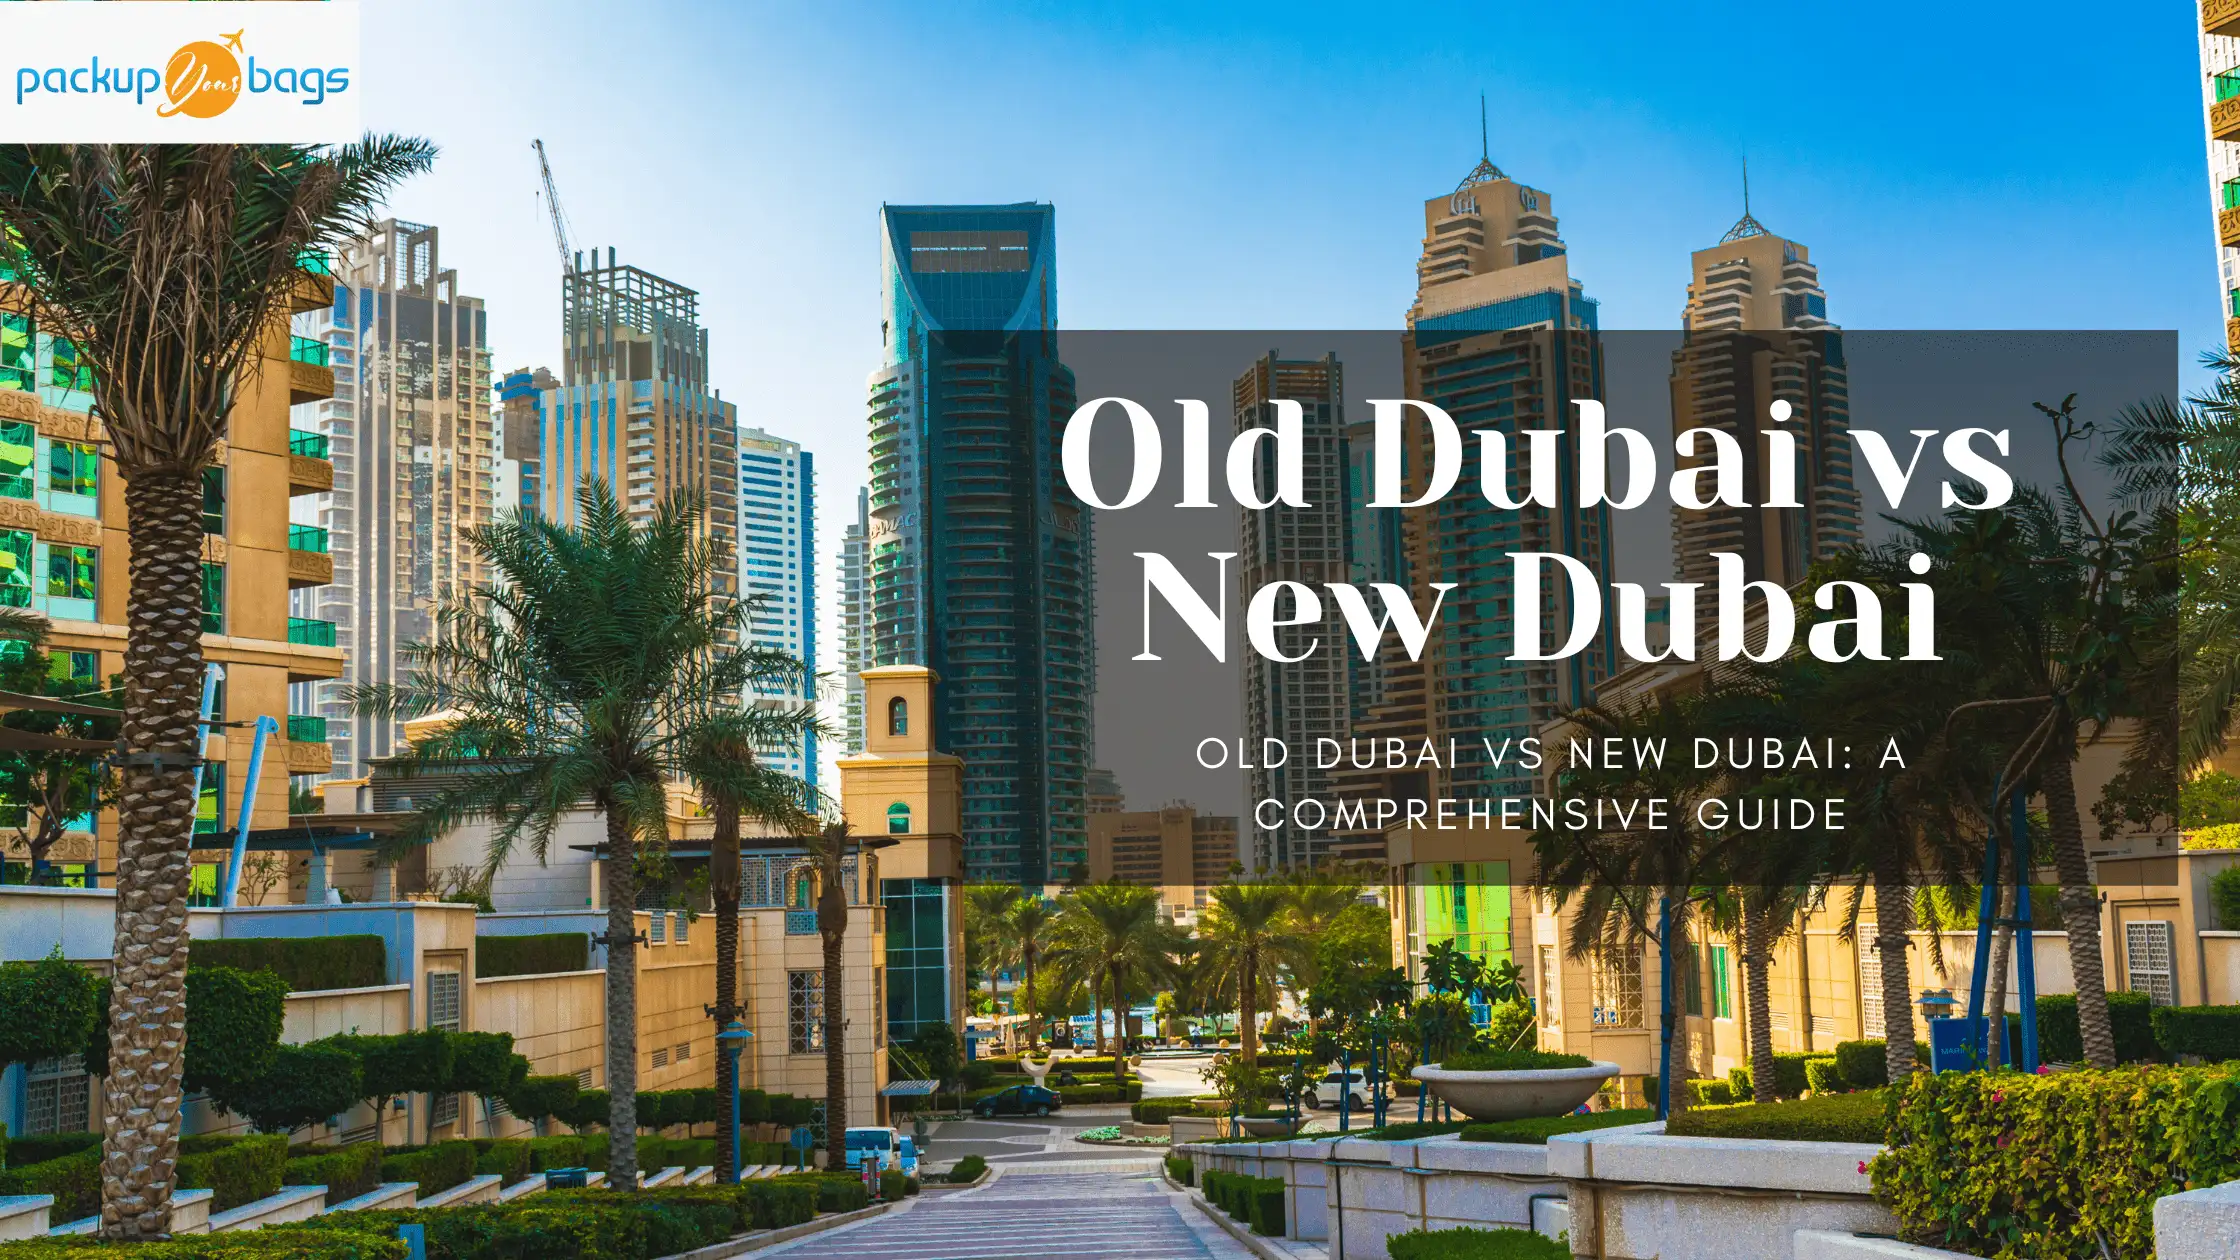 Old Dubai vs New Dubai